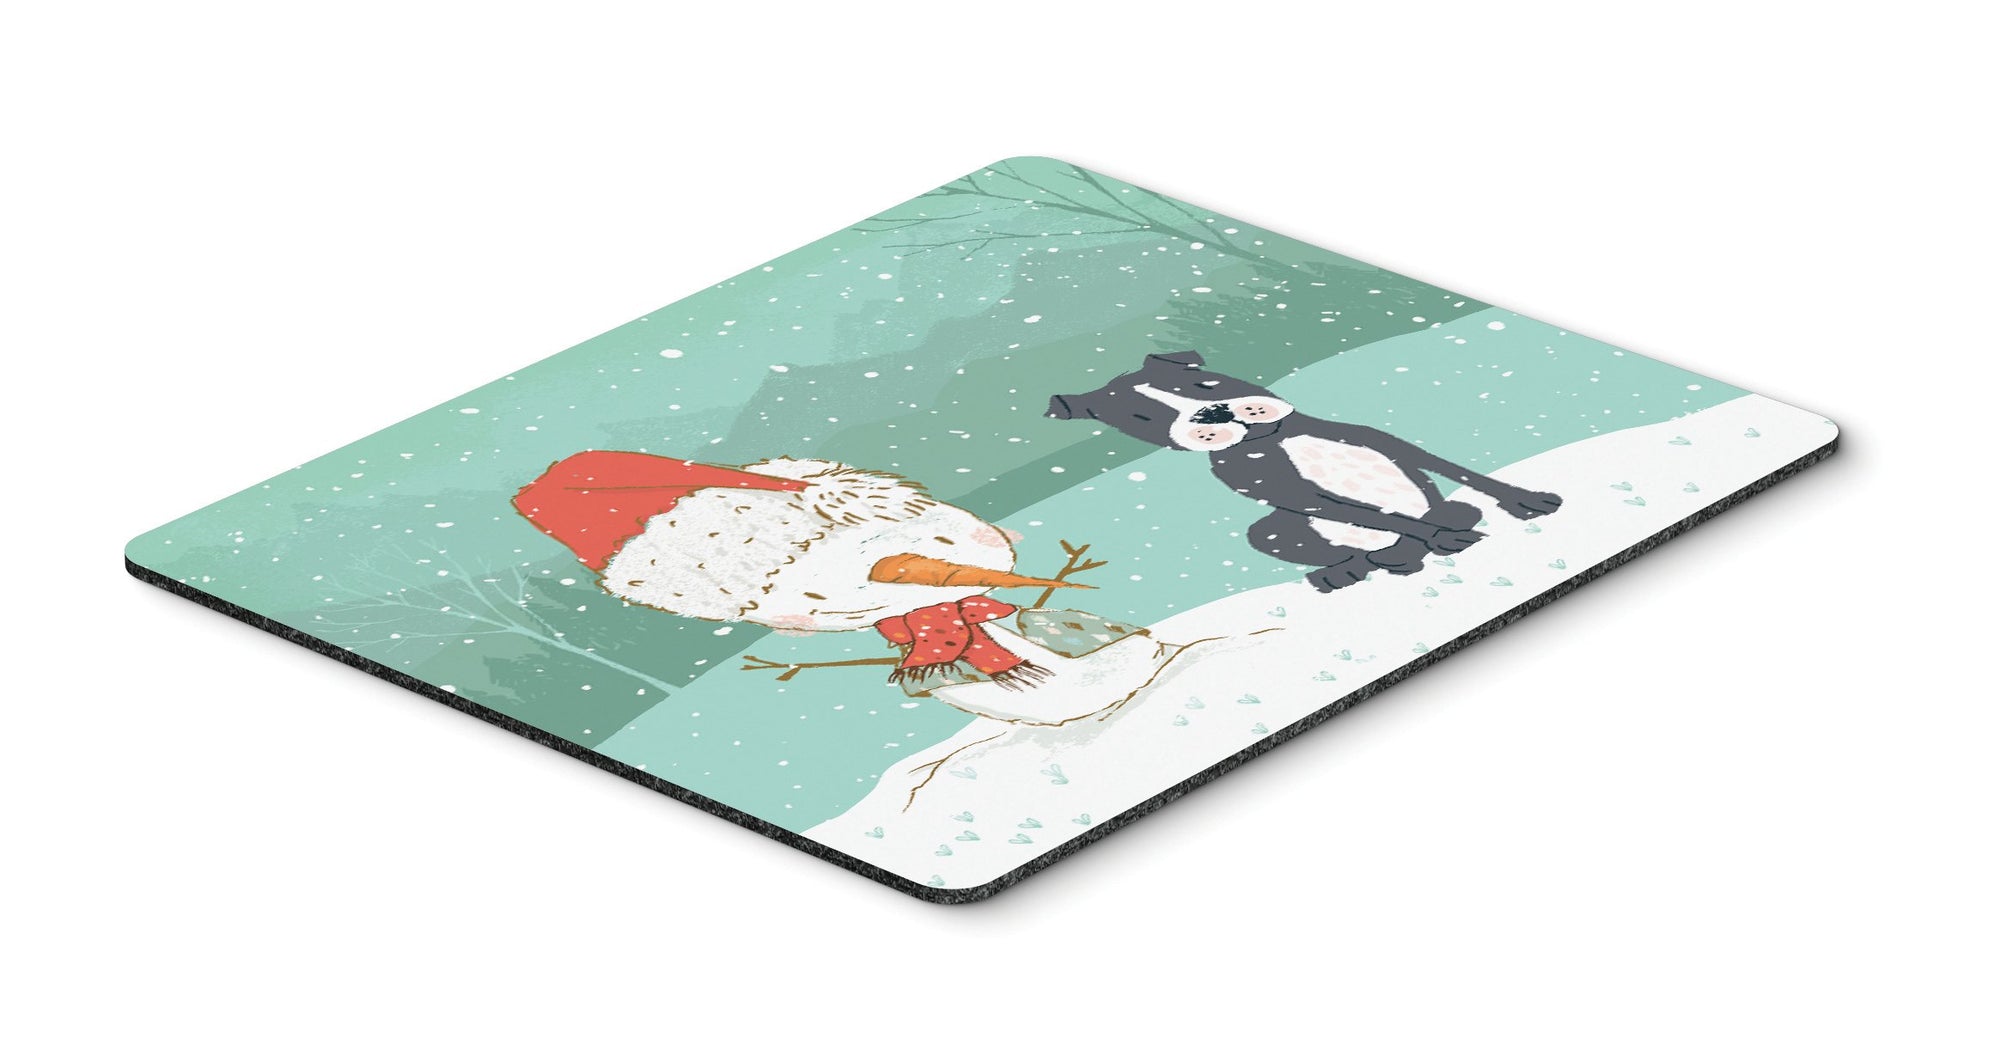 Black Staffie Snowman Christmas Mouse Pad, Hot Pad or Trivet CK2075MP by Caroline's Treasures